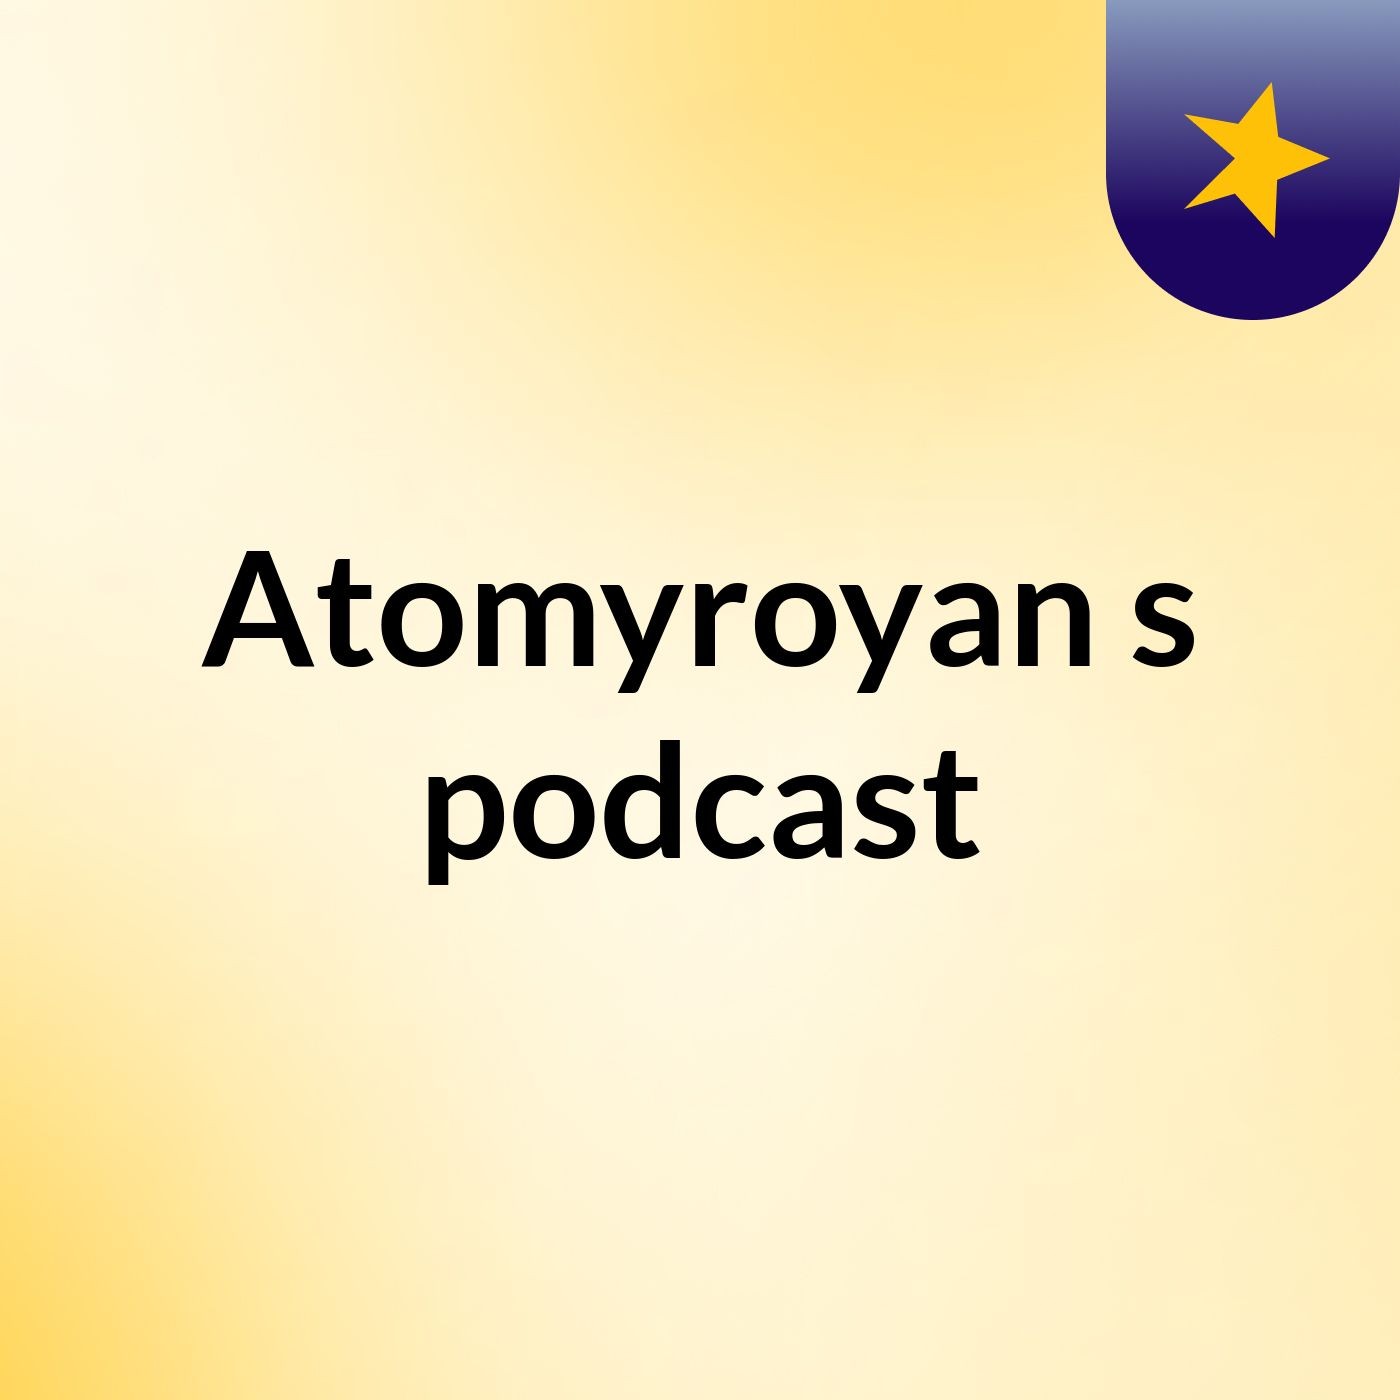 Atomyroyan's podcast